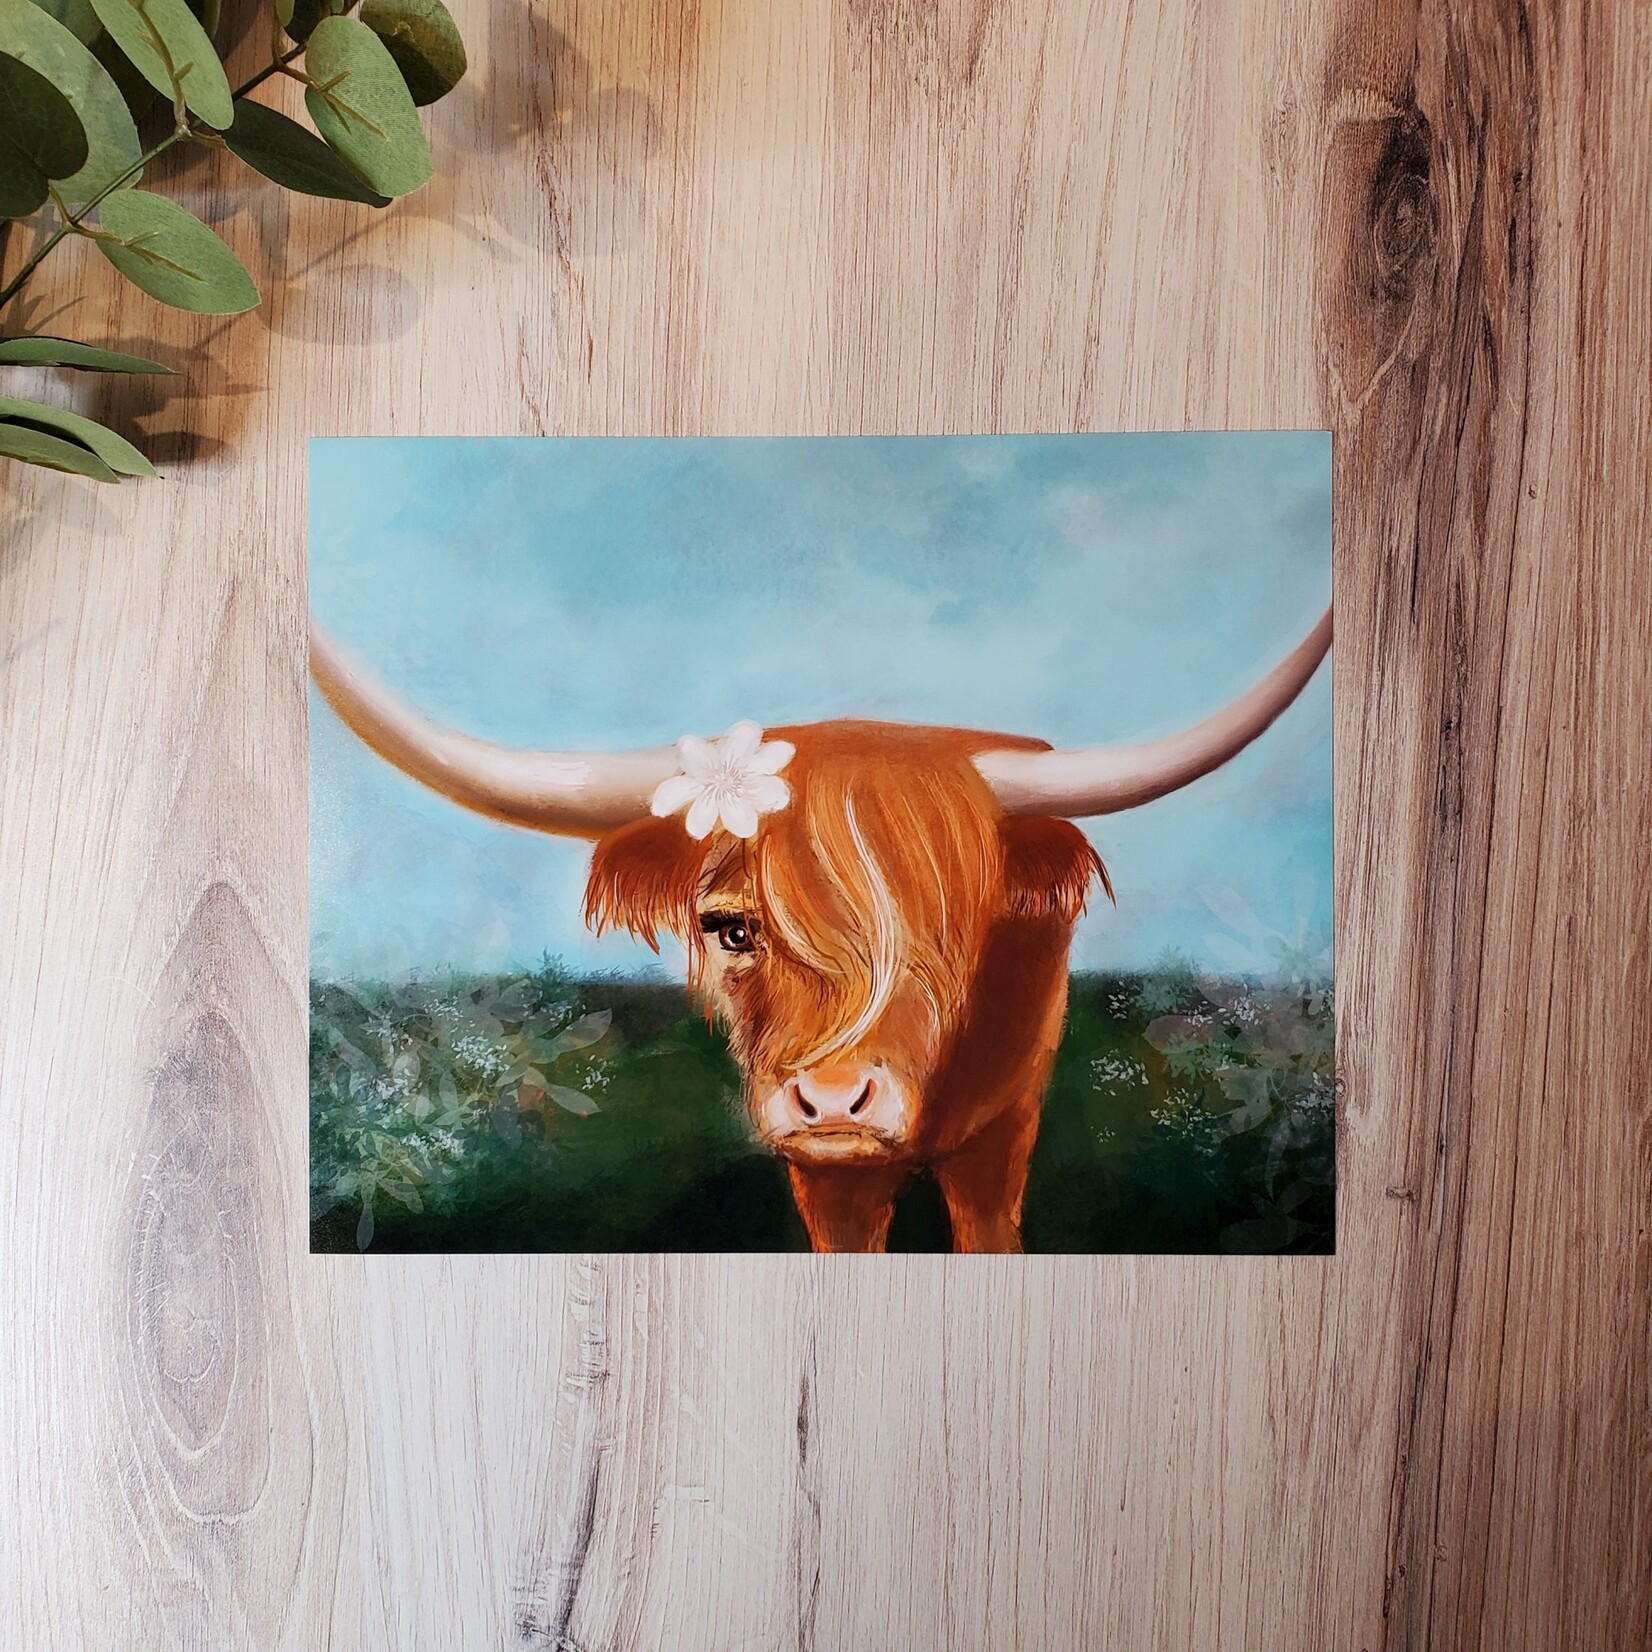 Asja Dawn "Highland Cow" - 8x10